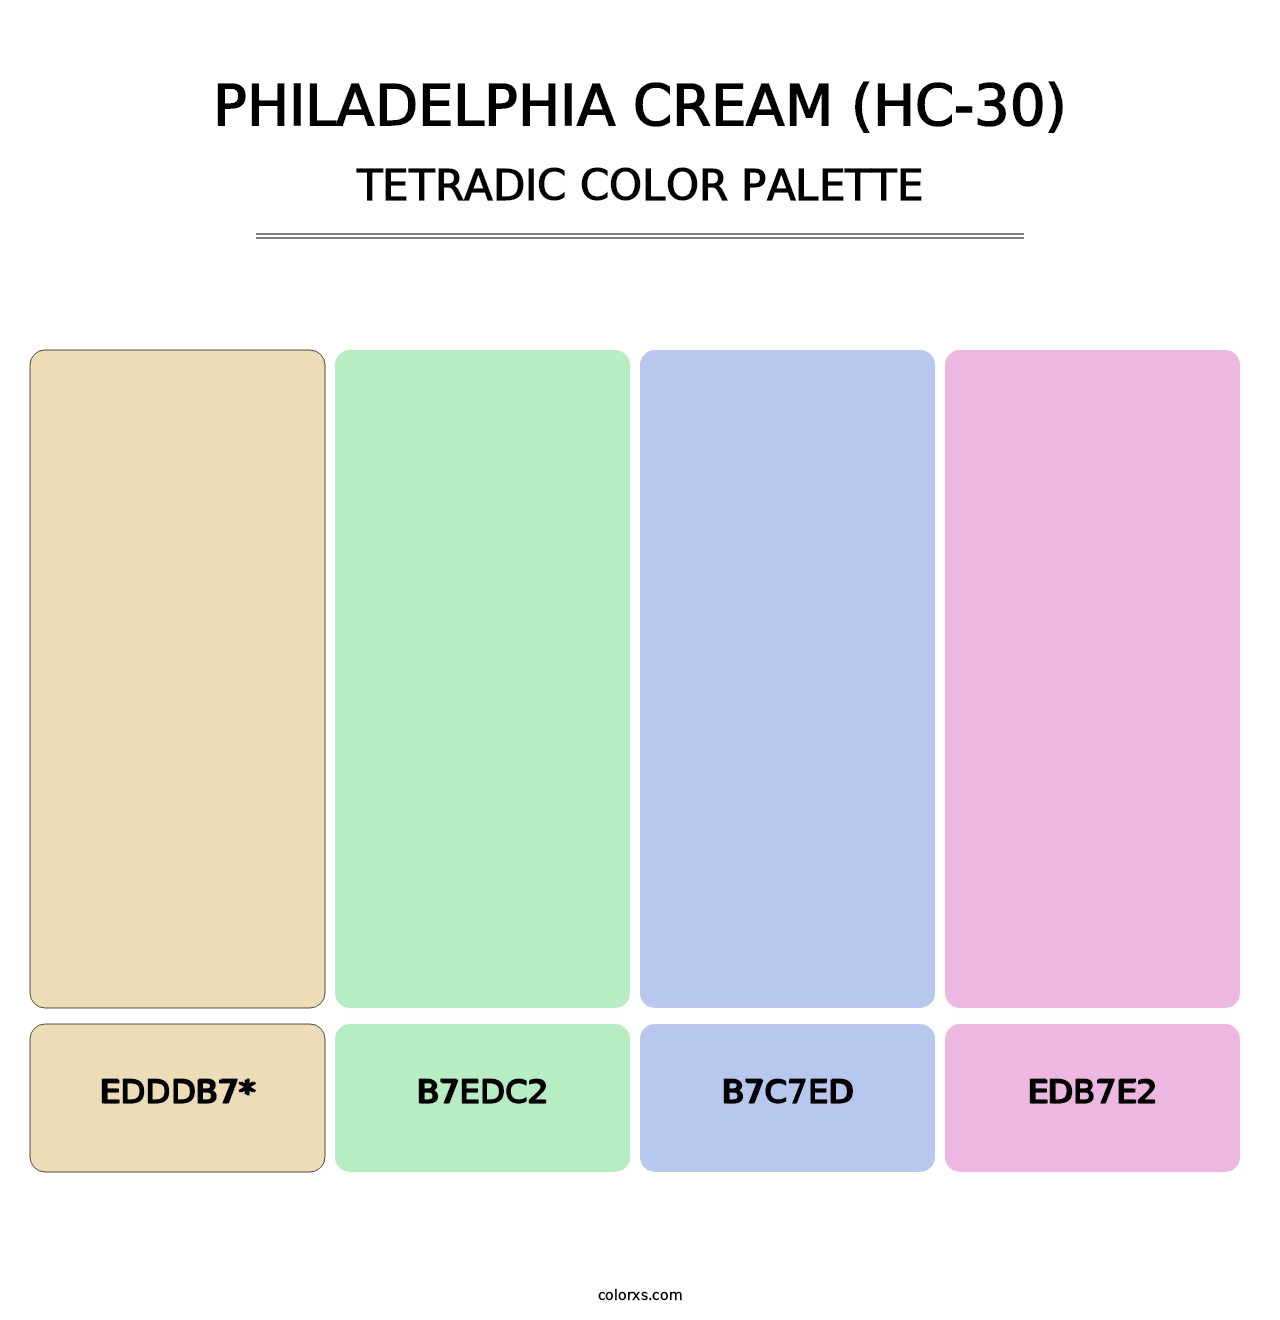 Philadelphia Cream (HC-30) - Tetradic Color Palette